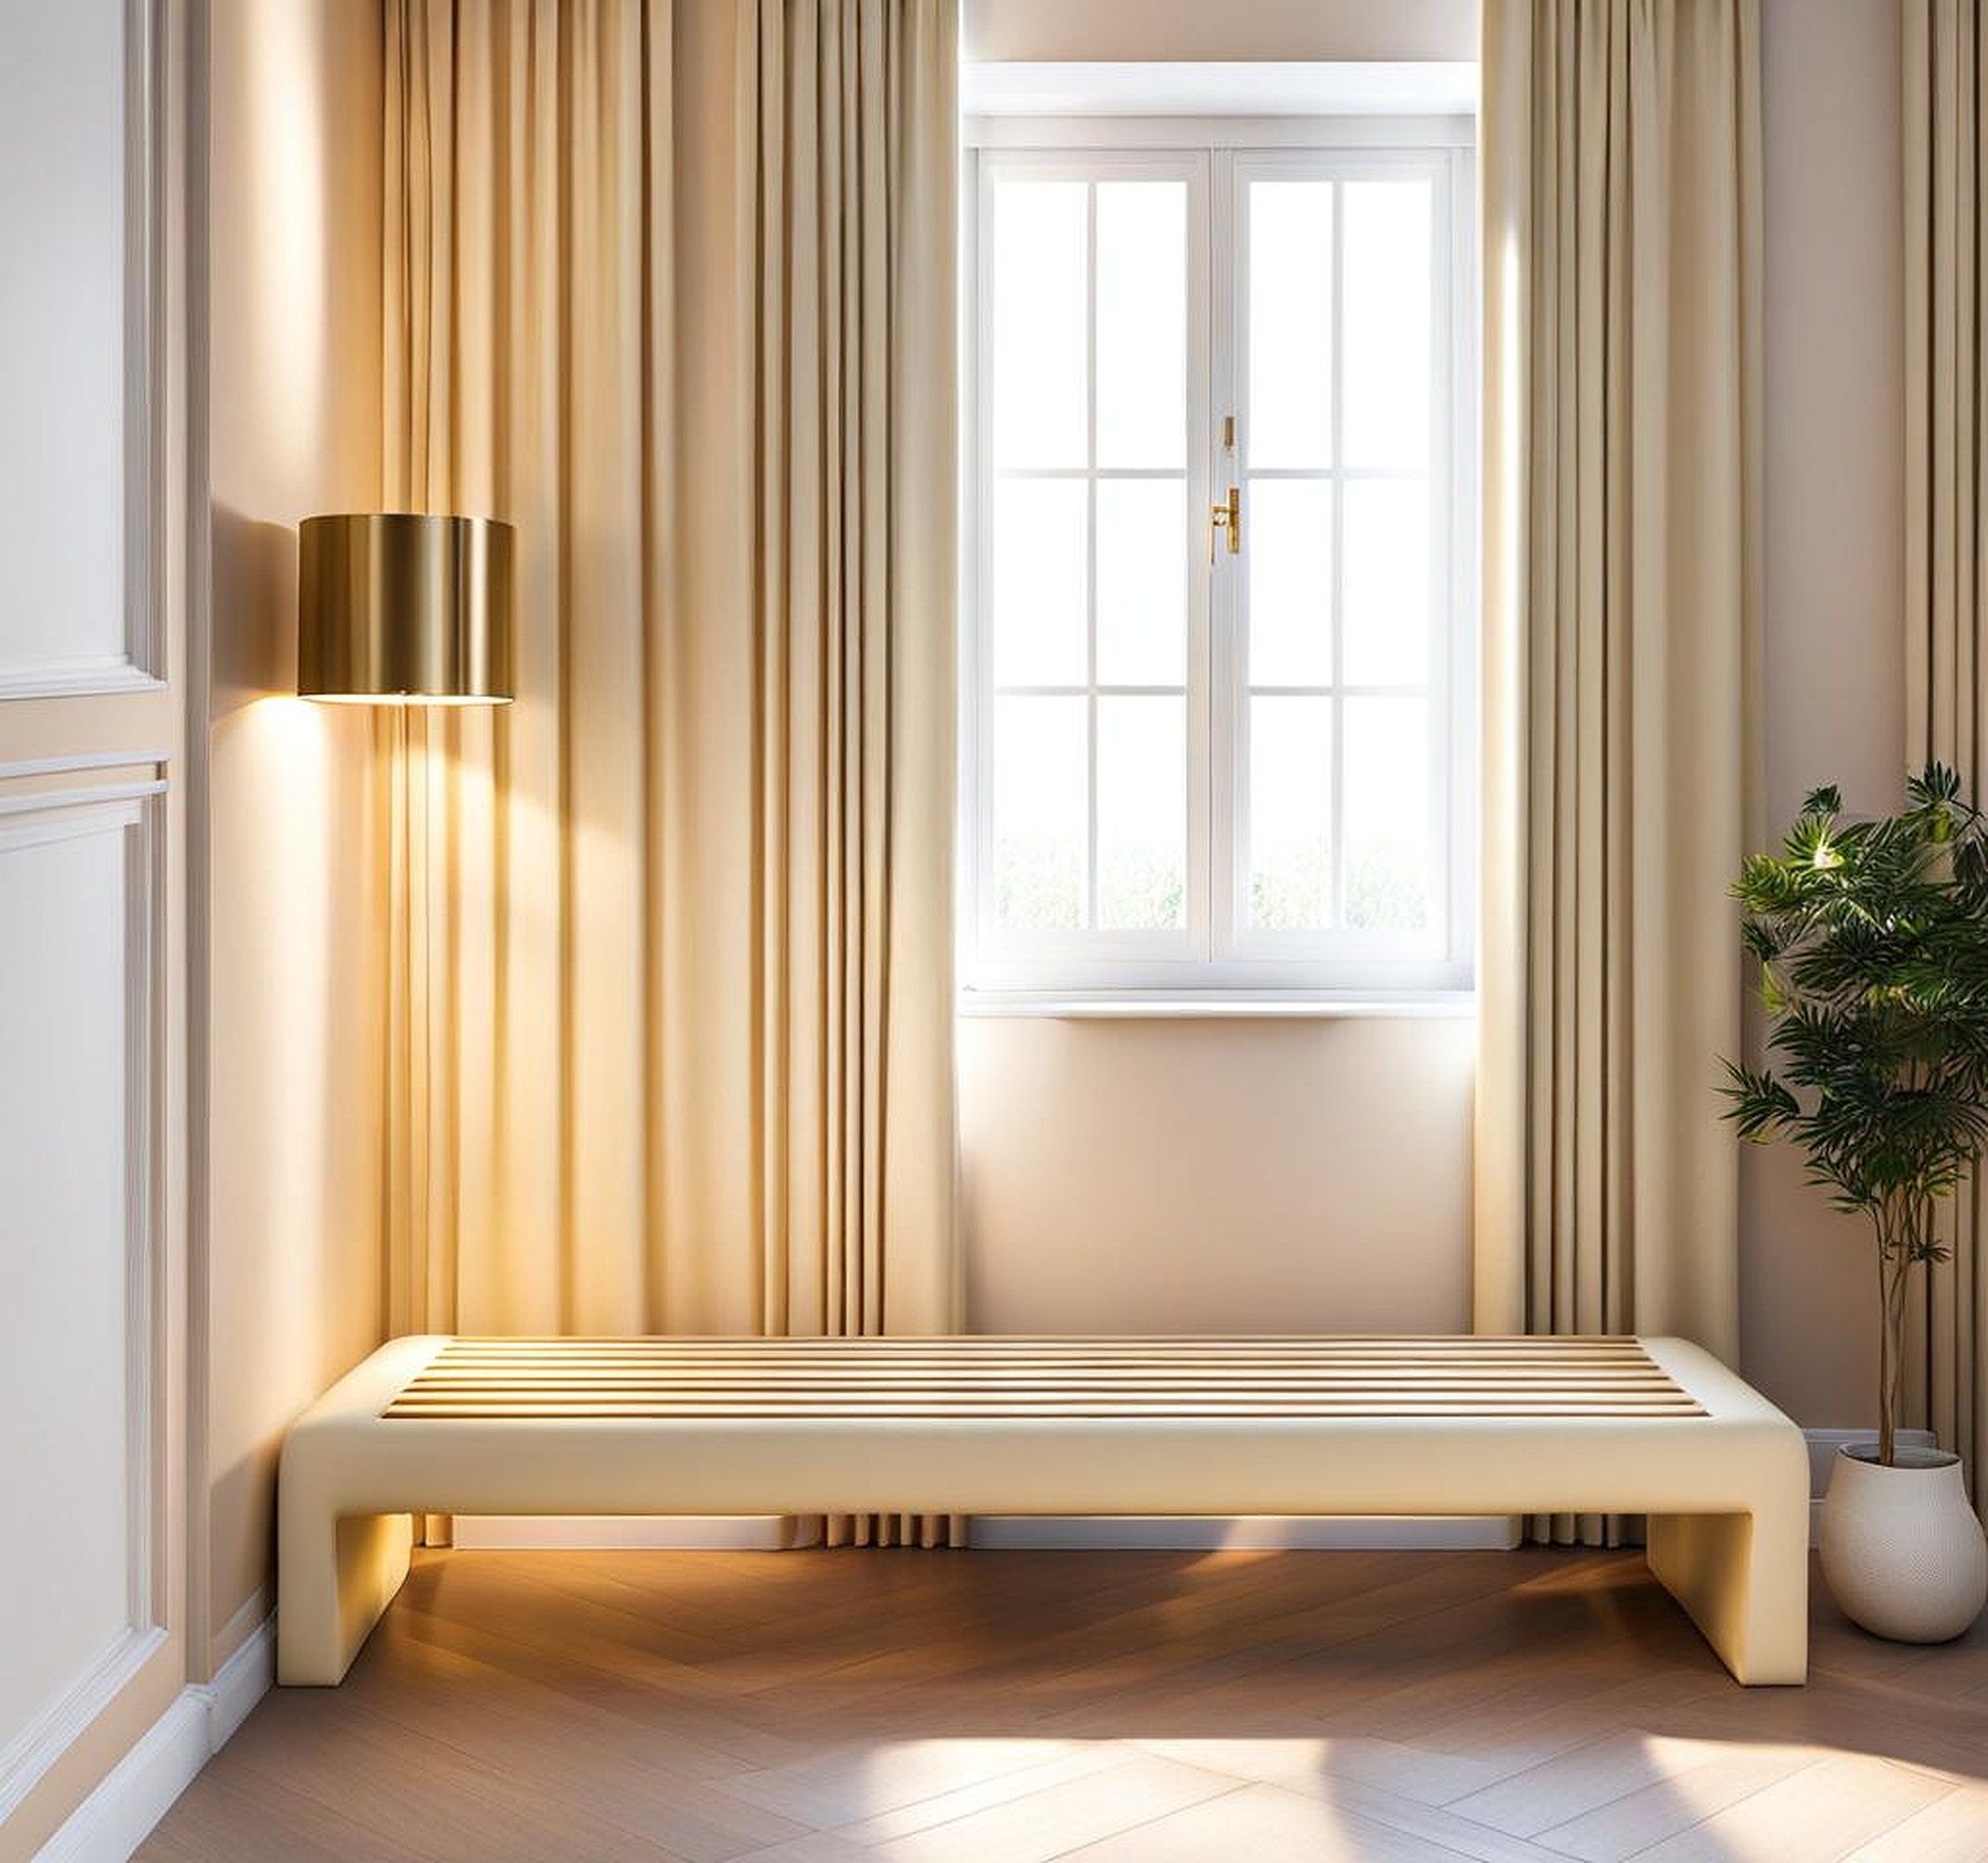 Cream Bench for Bedroom Design Inspiration for a Cozy Retreat